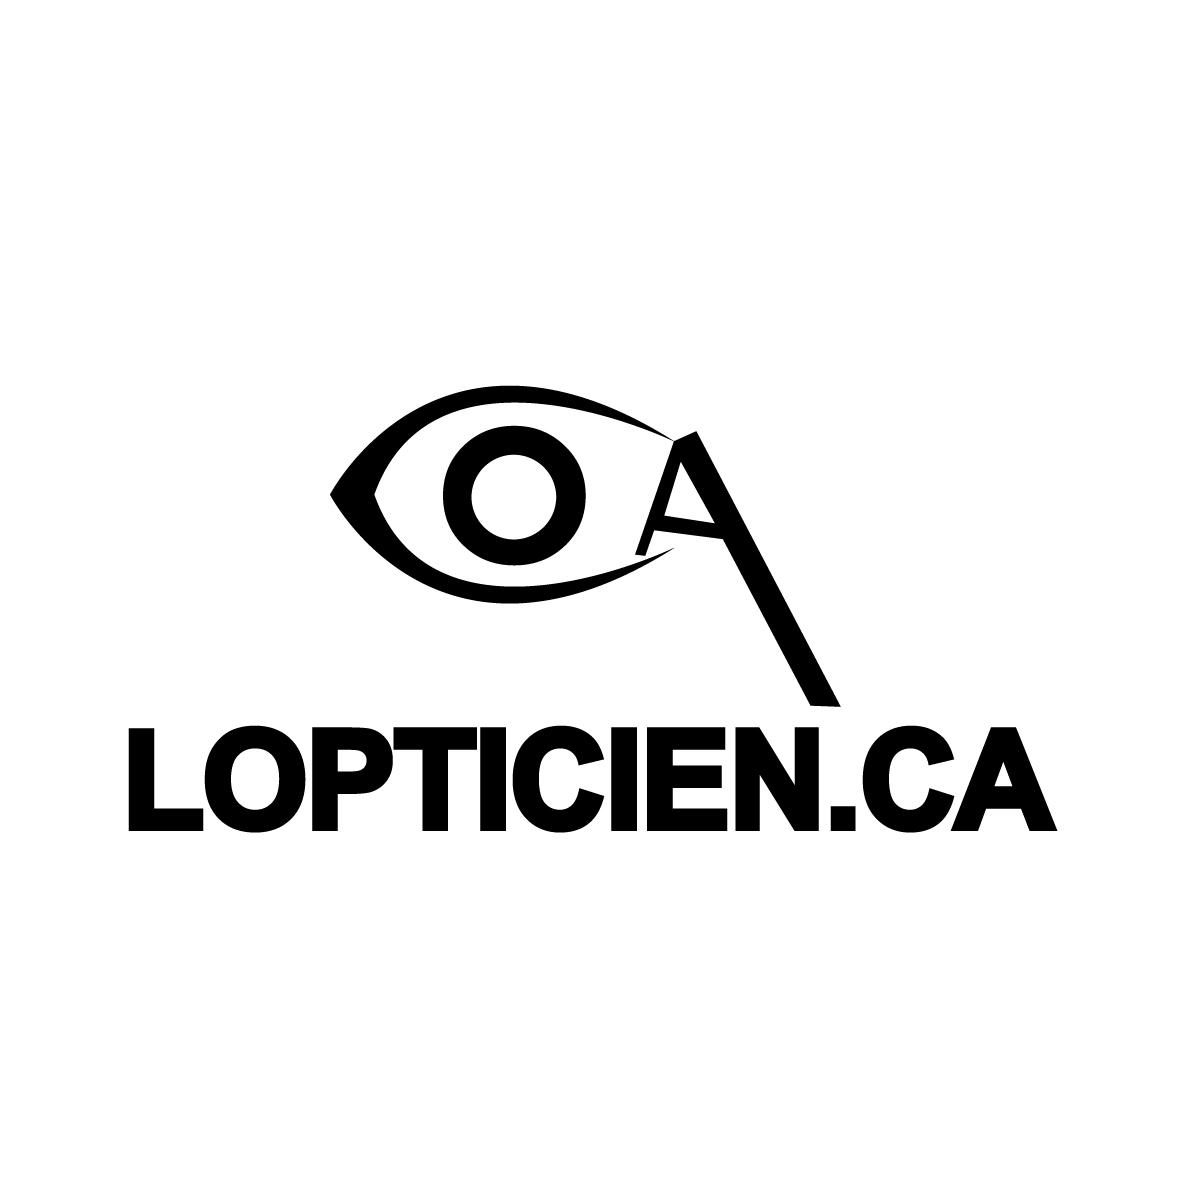 Lopticien.ca